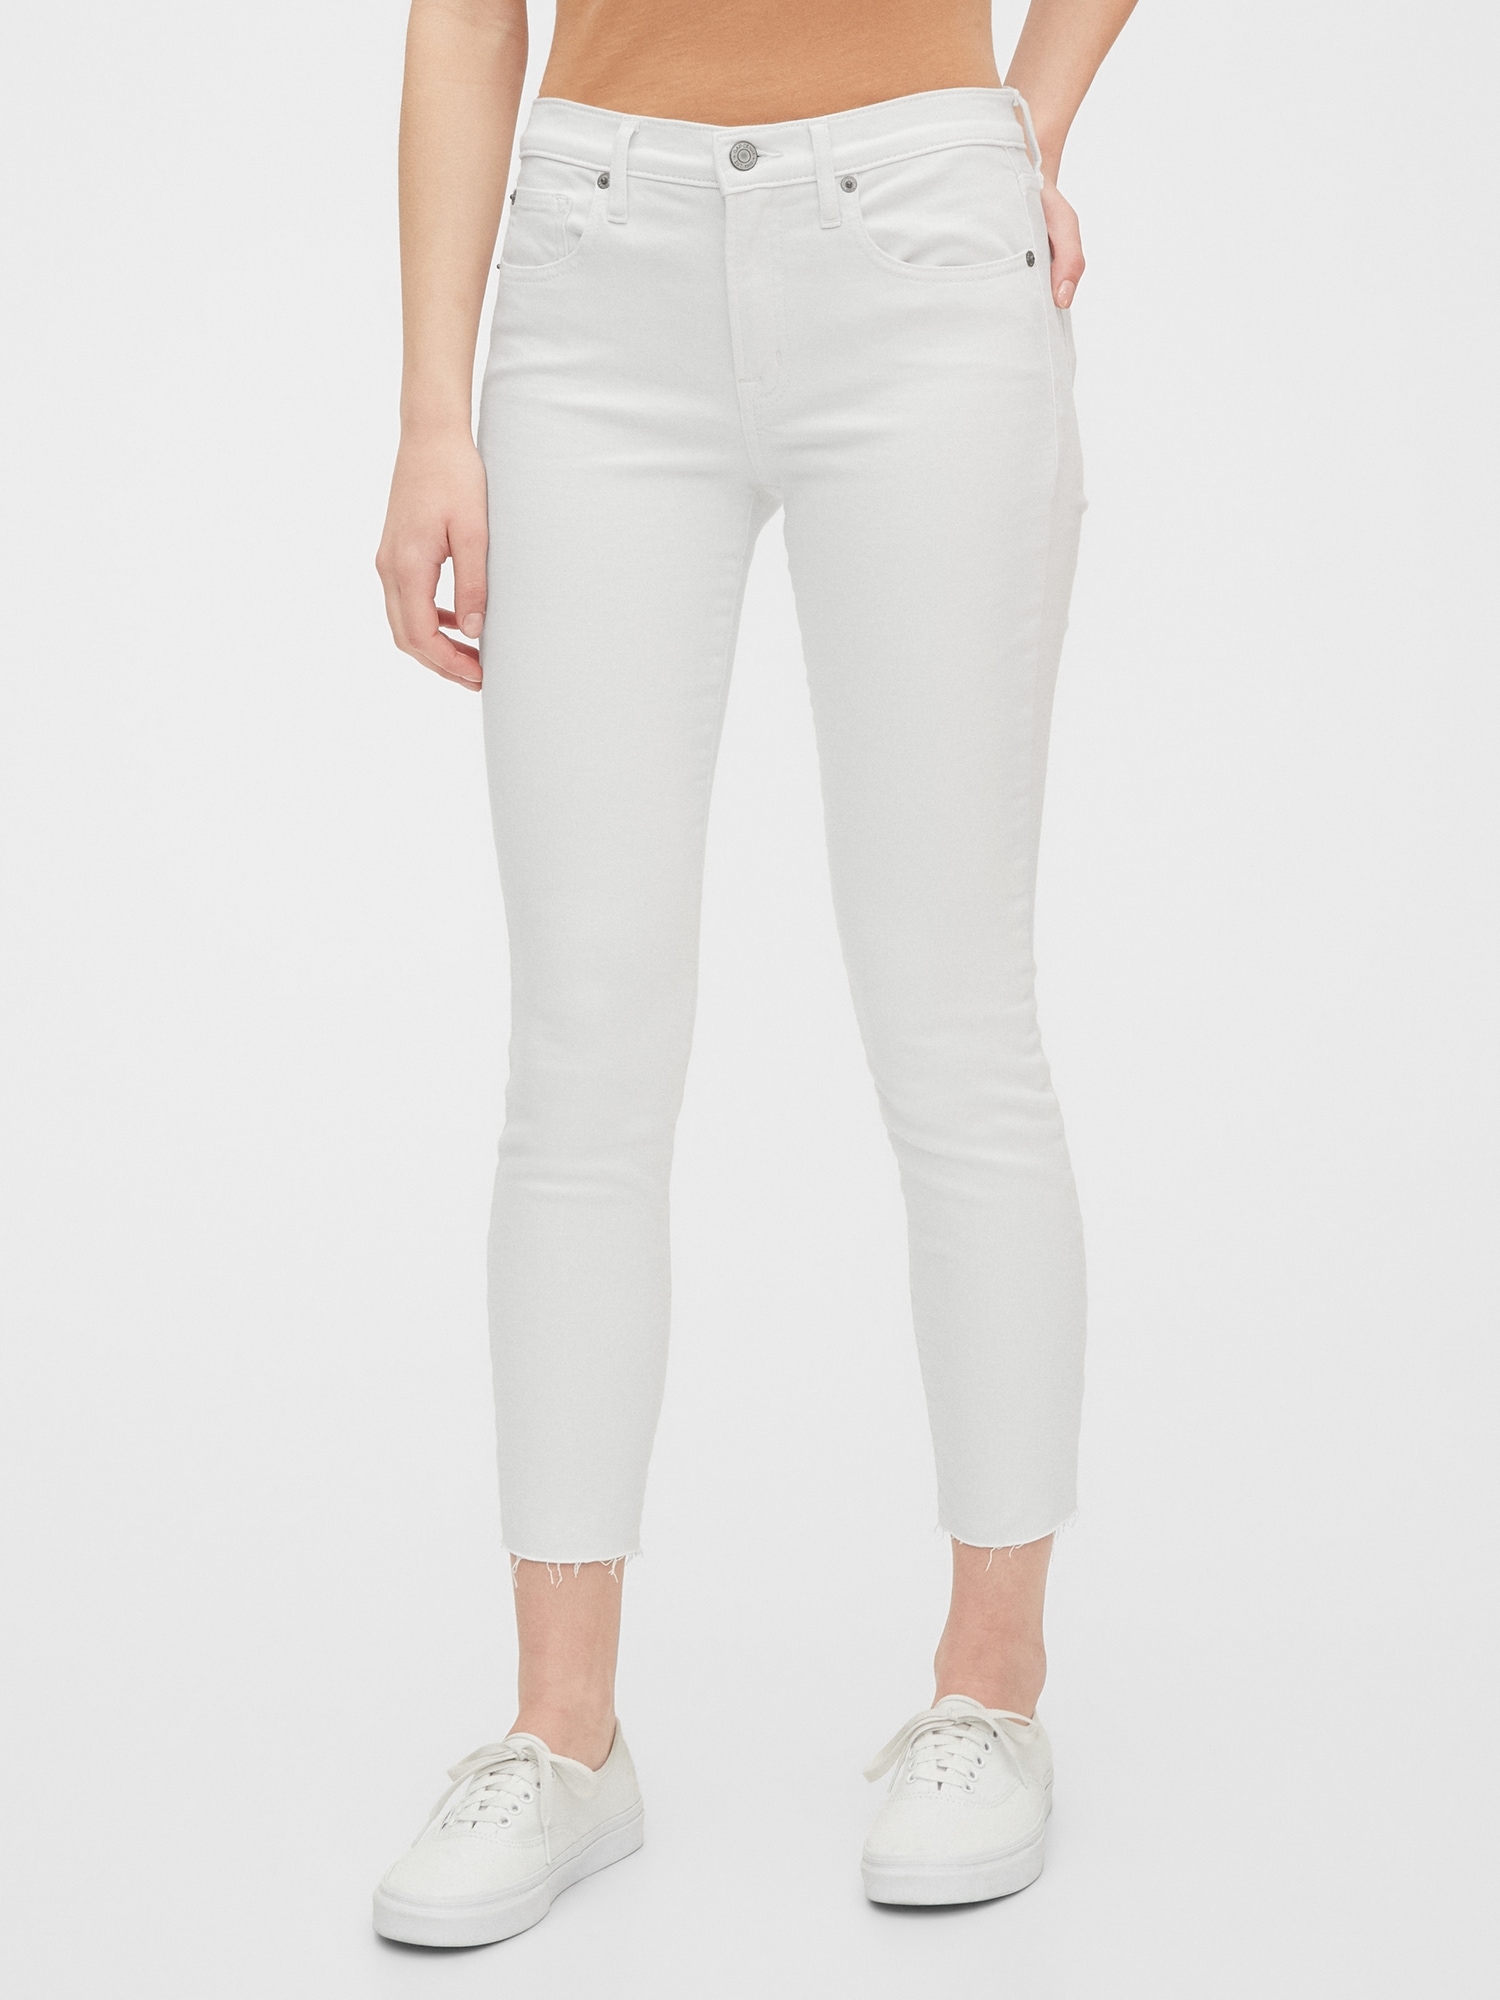 gap true skinny white jeans